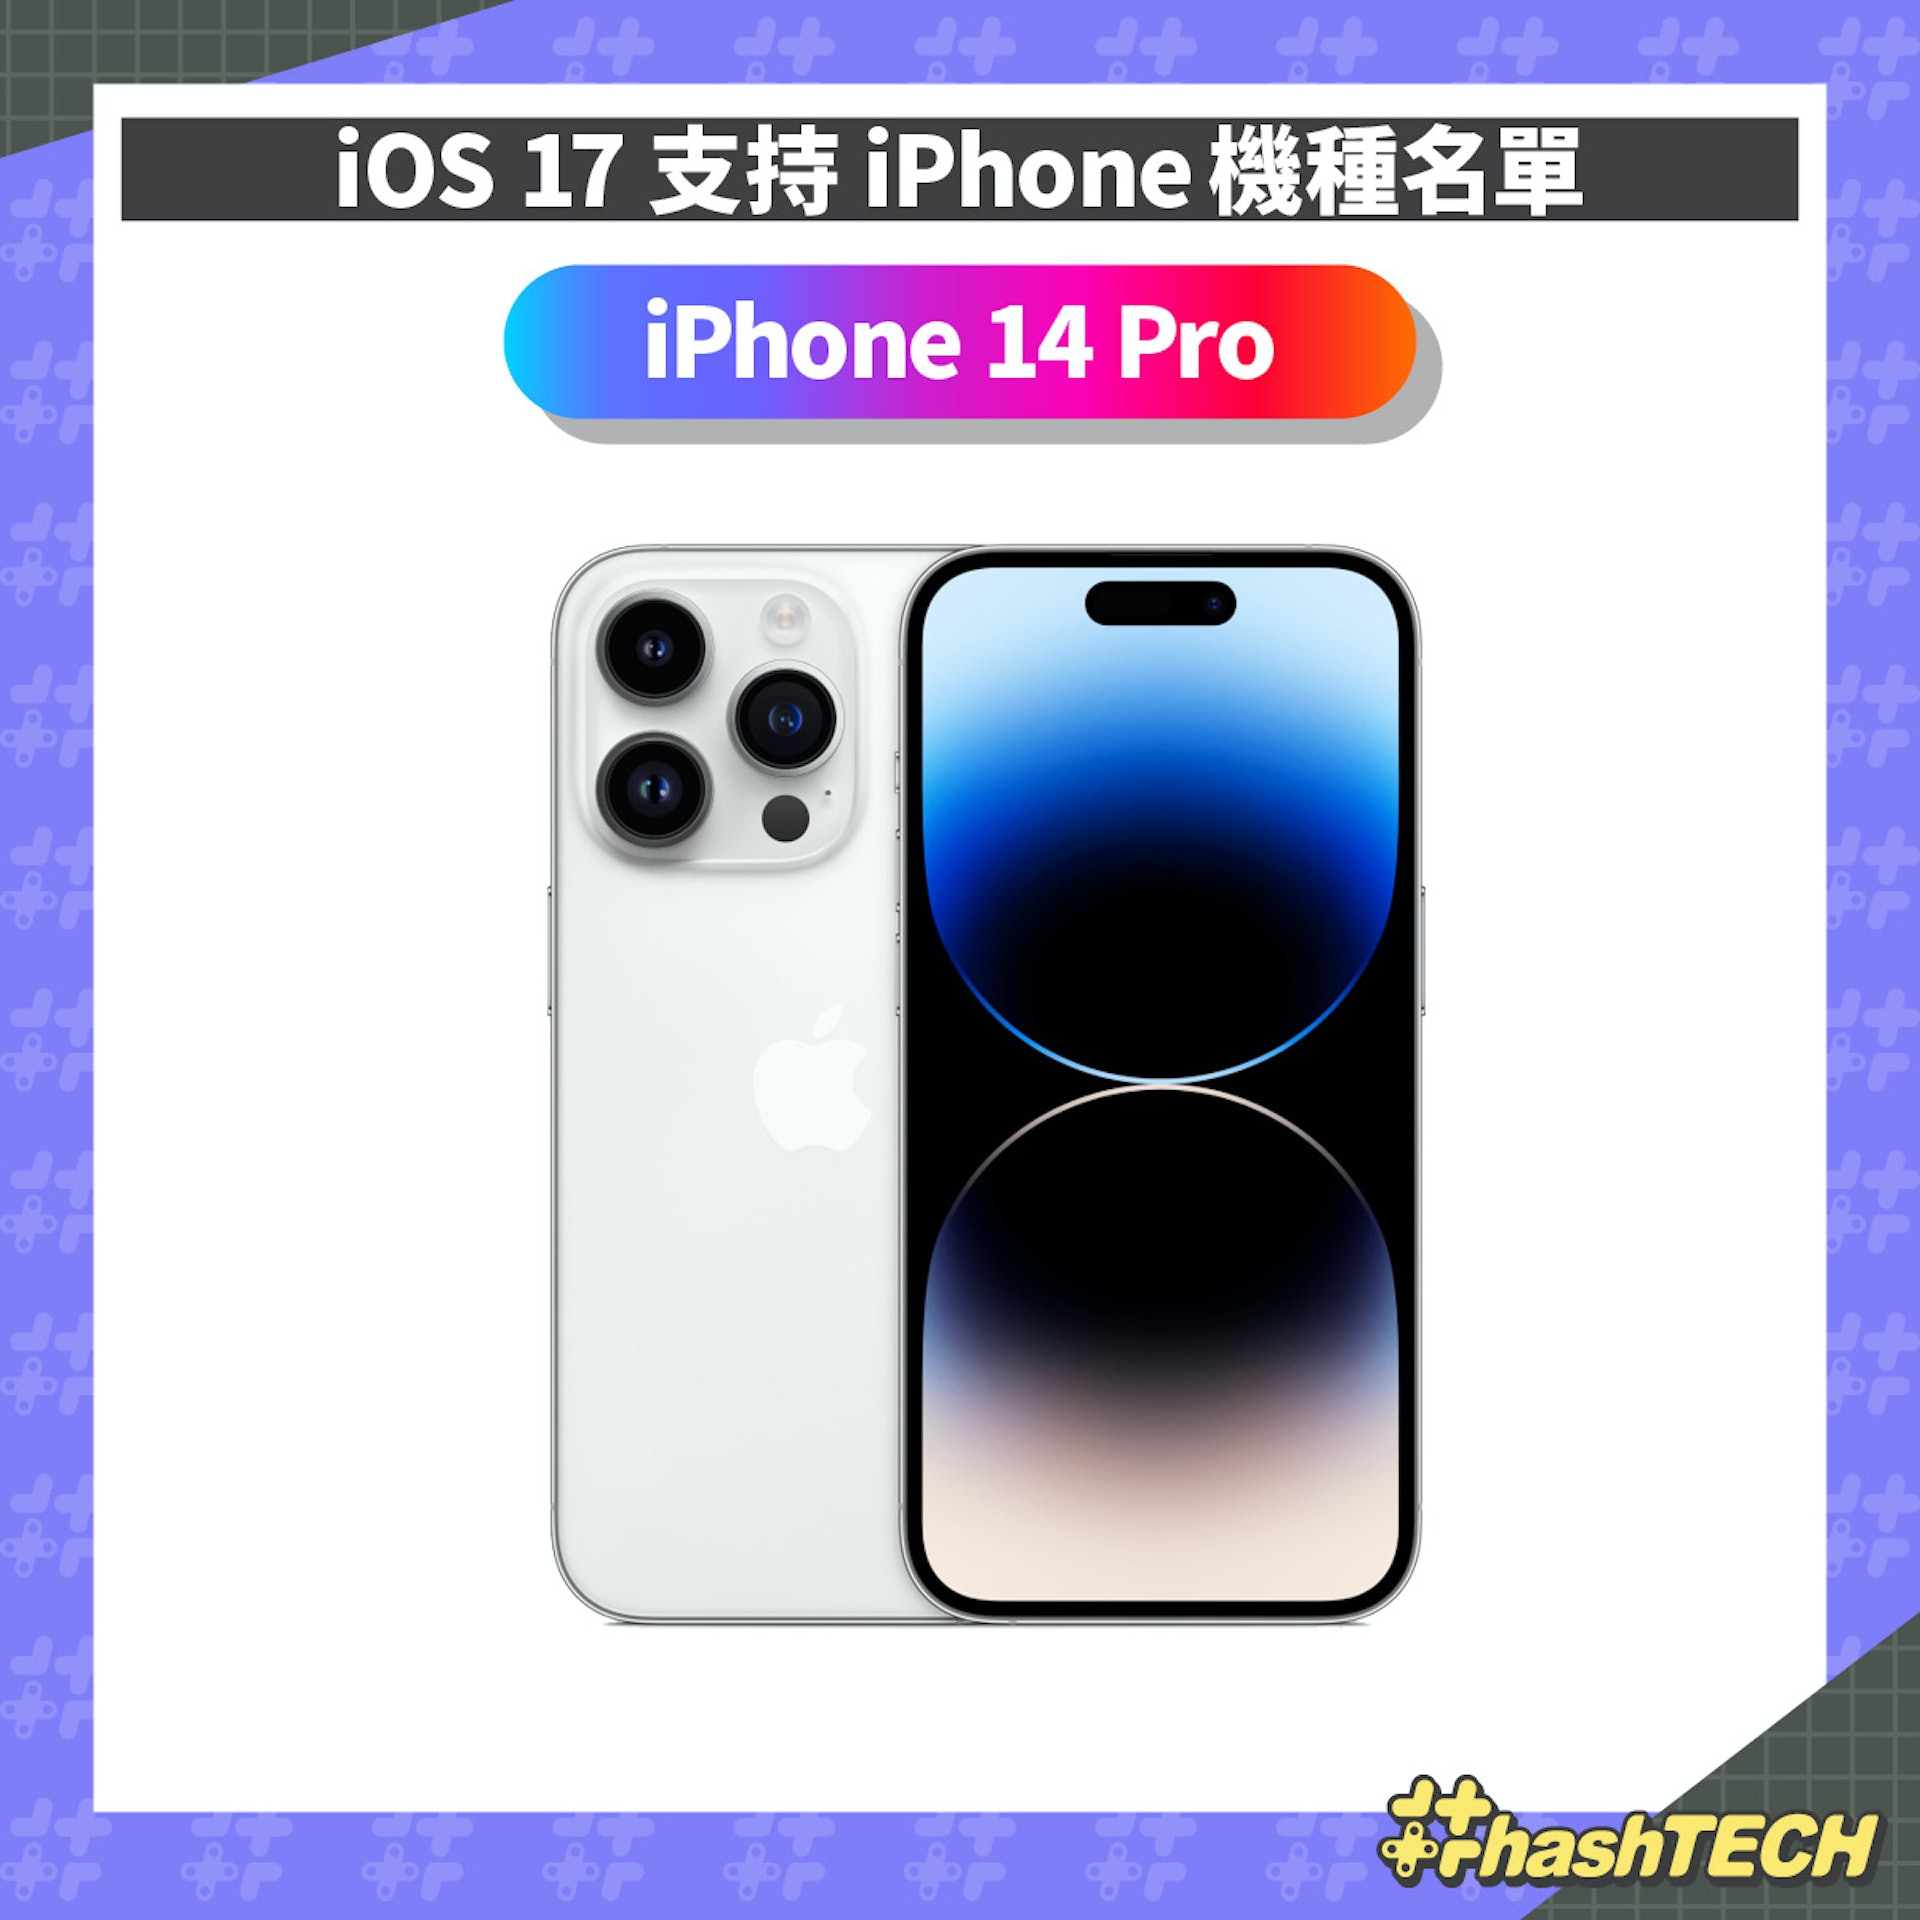 iOS 17 支持 iPhone機種名單